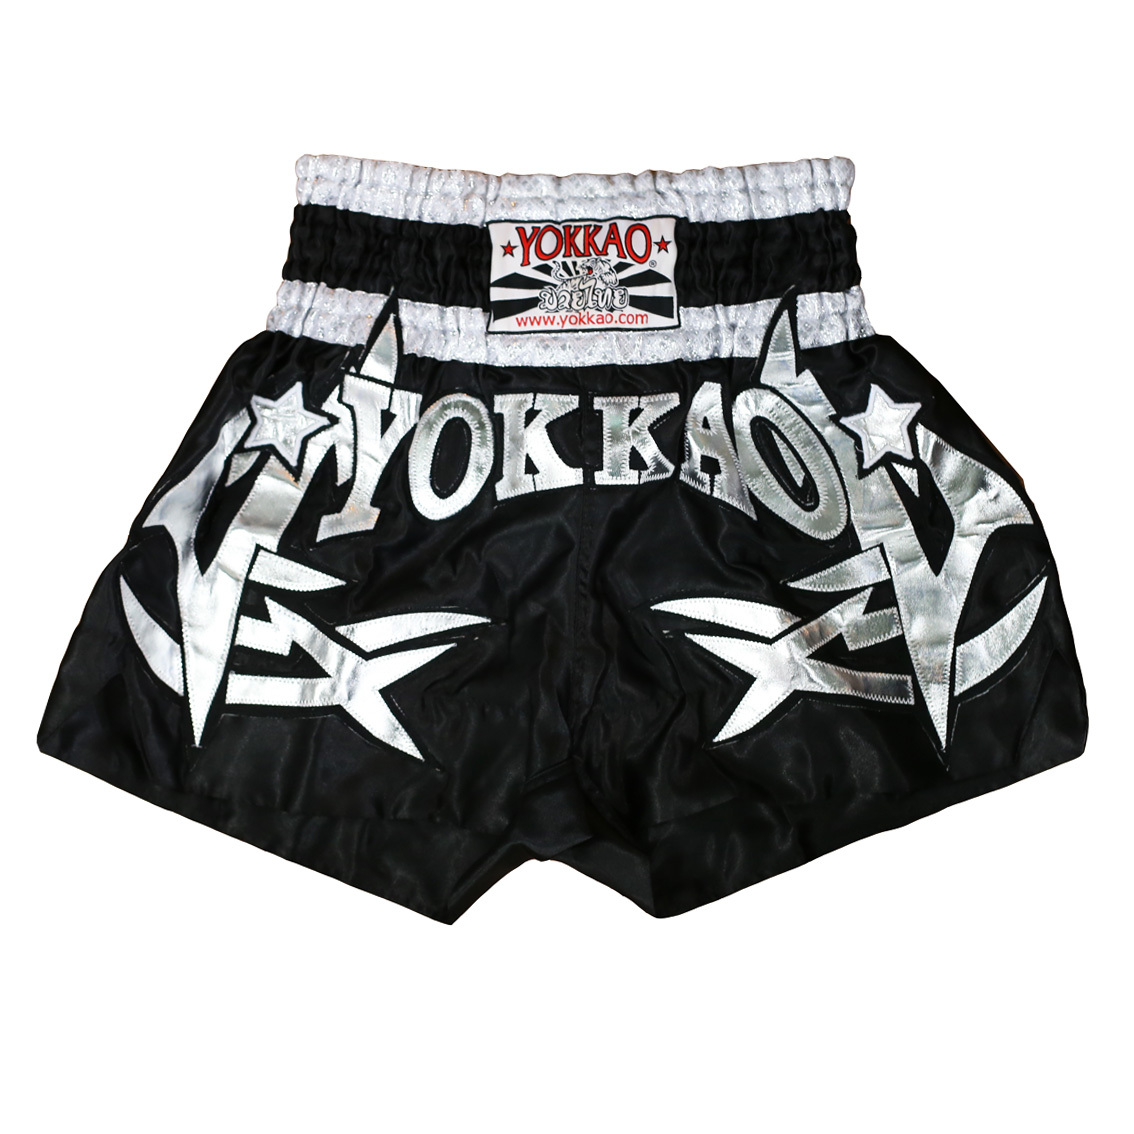 YOKKAO - CarbonFit Shorts - TRIBAL - Small